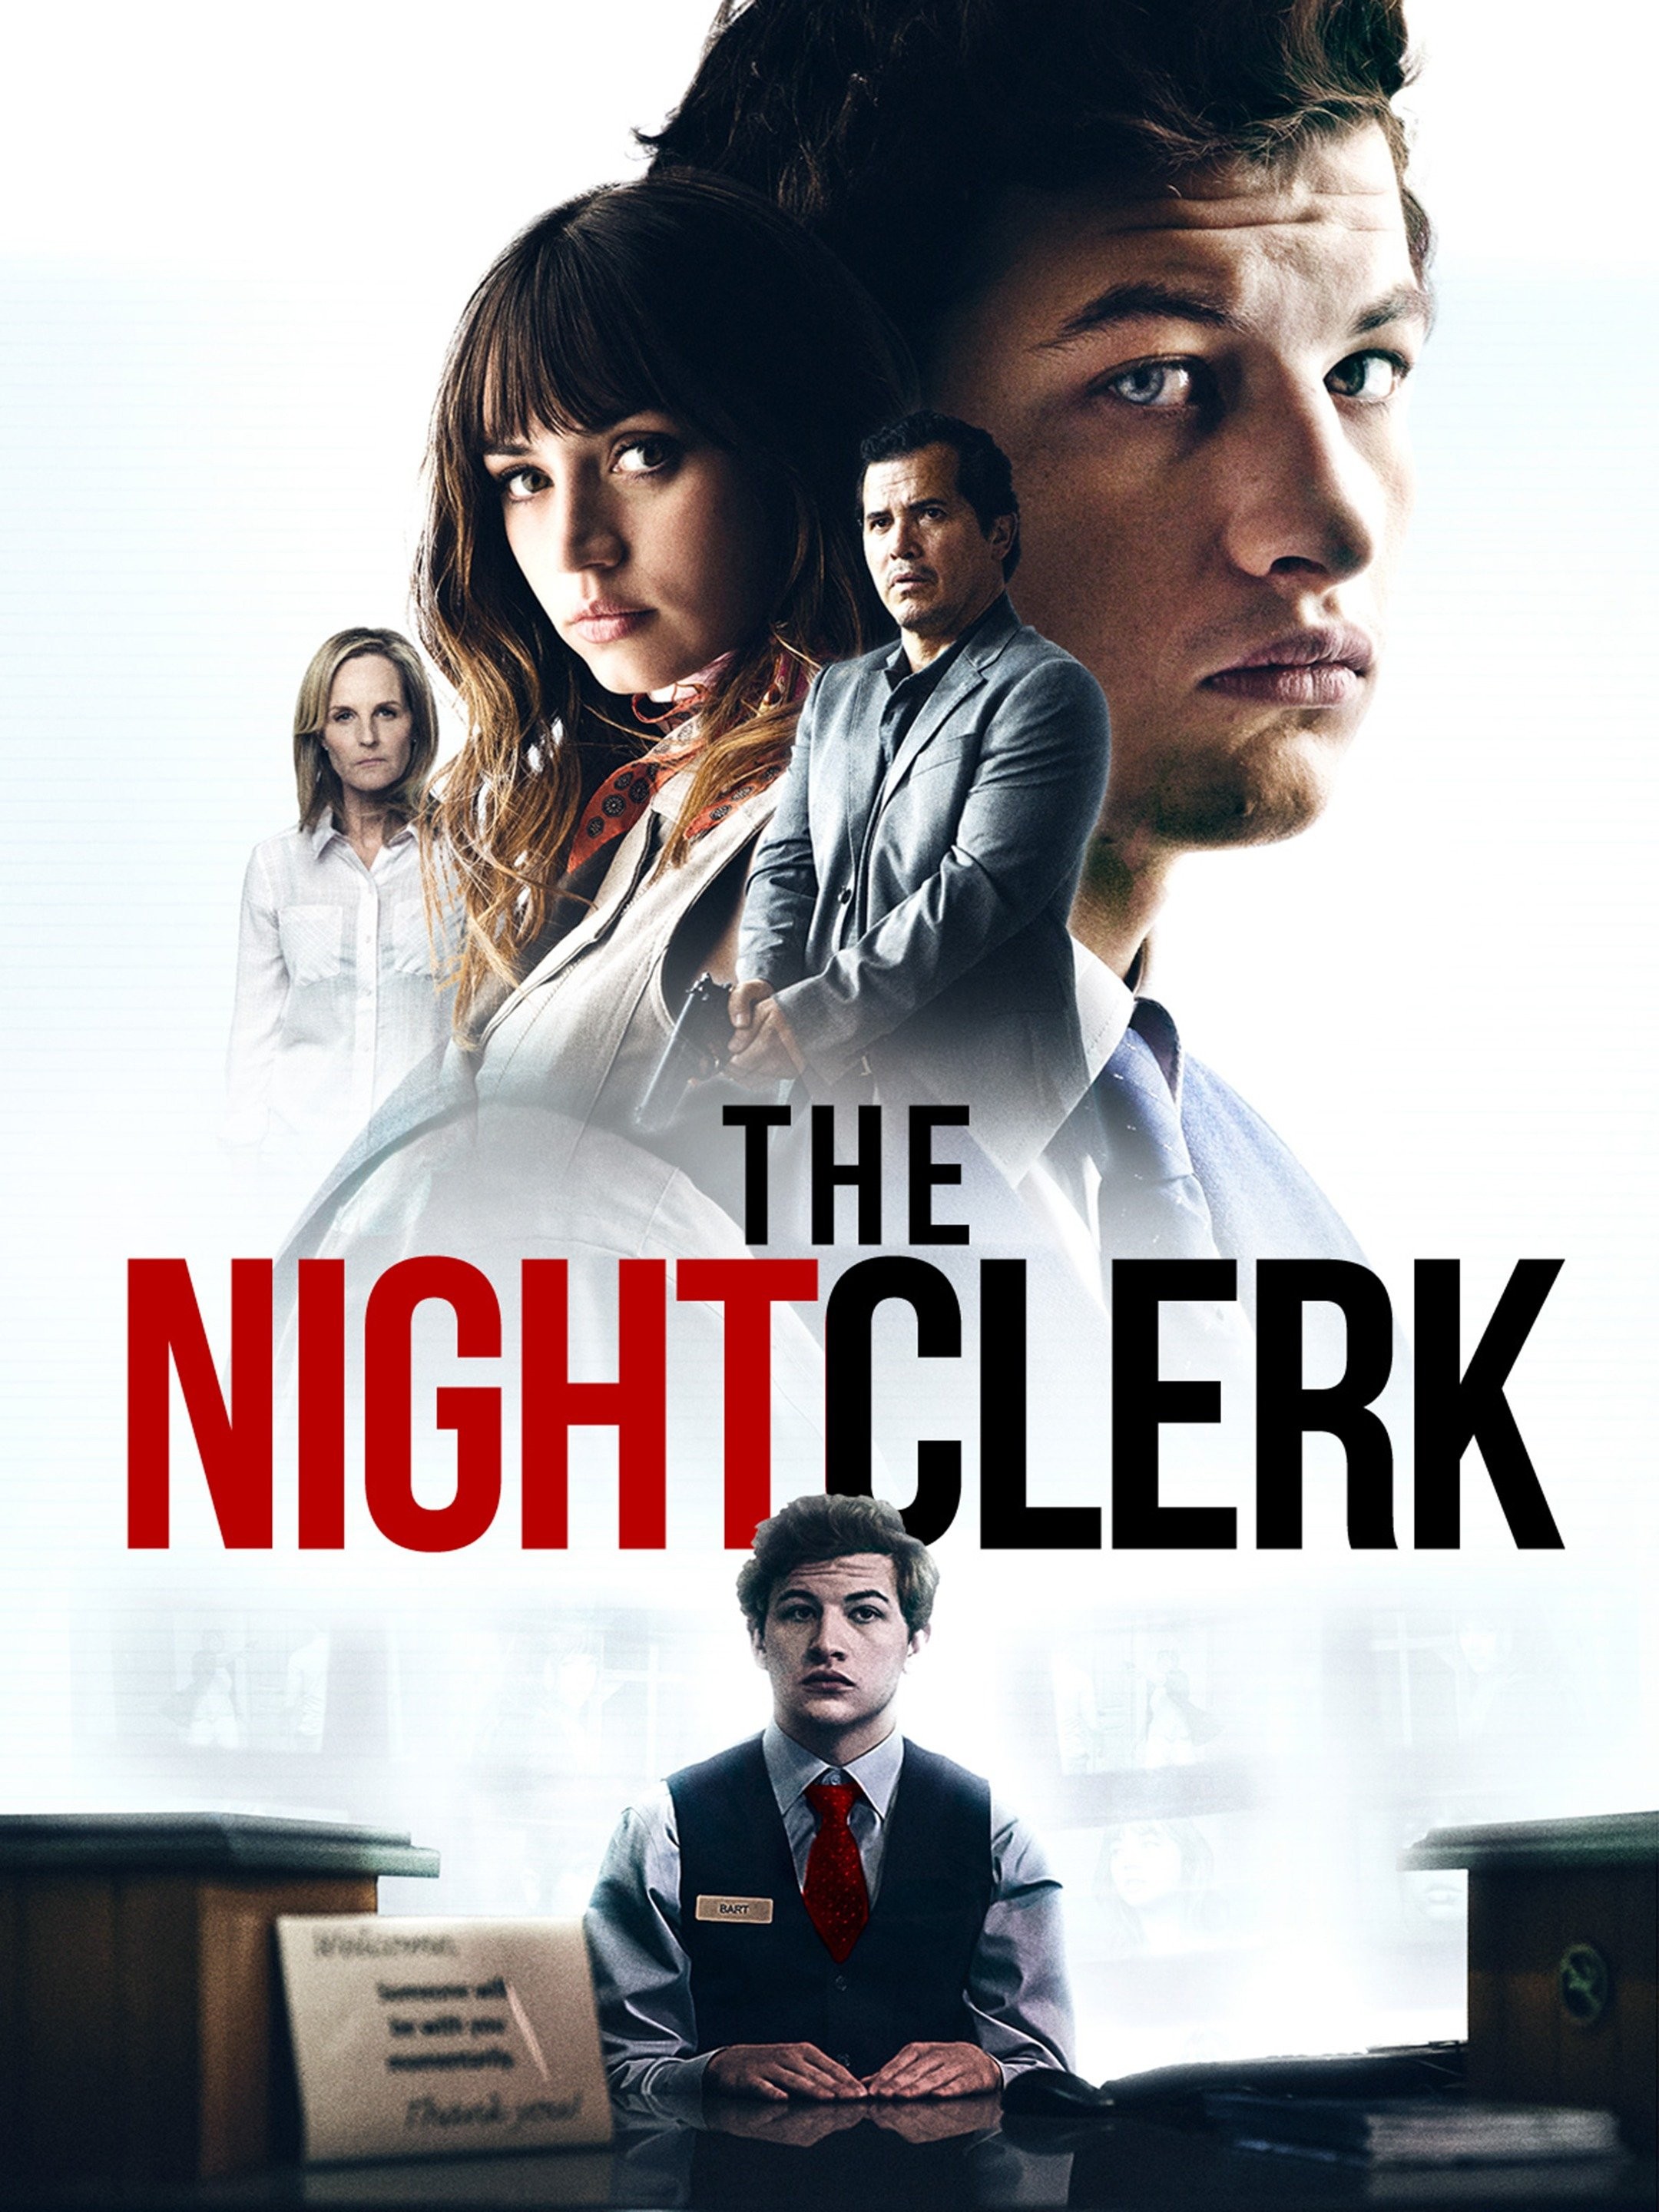 The Night Clerk - Wikipedia